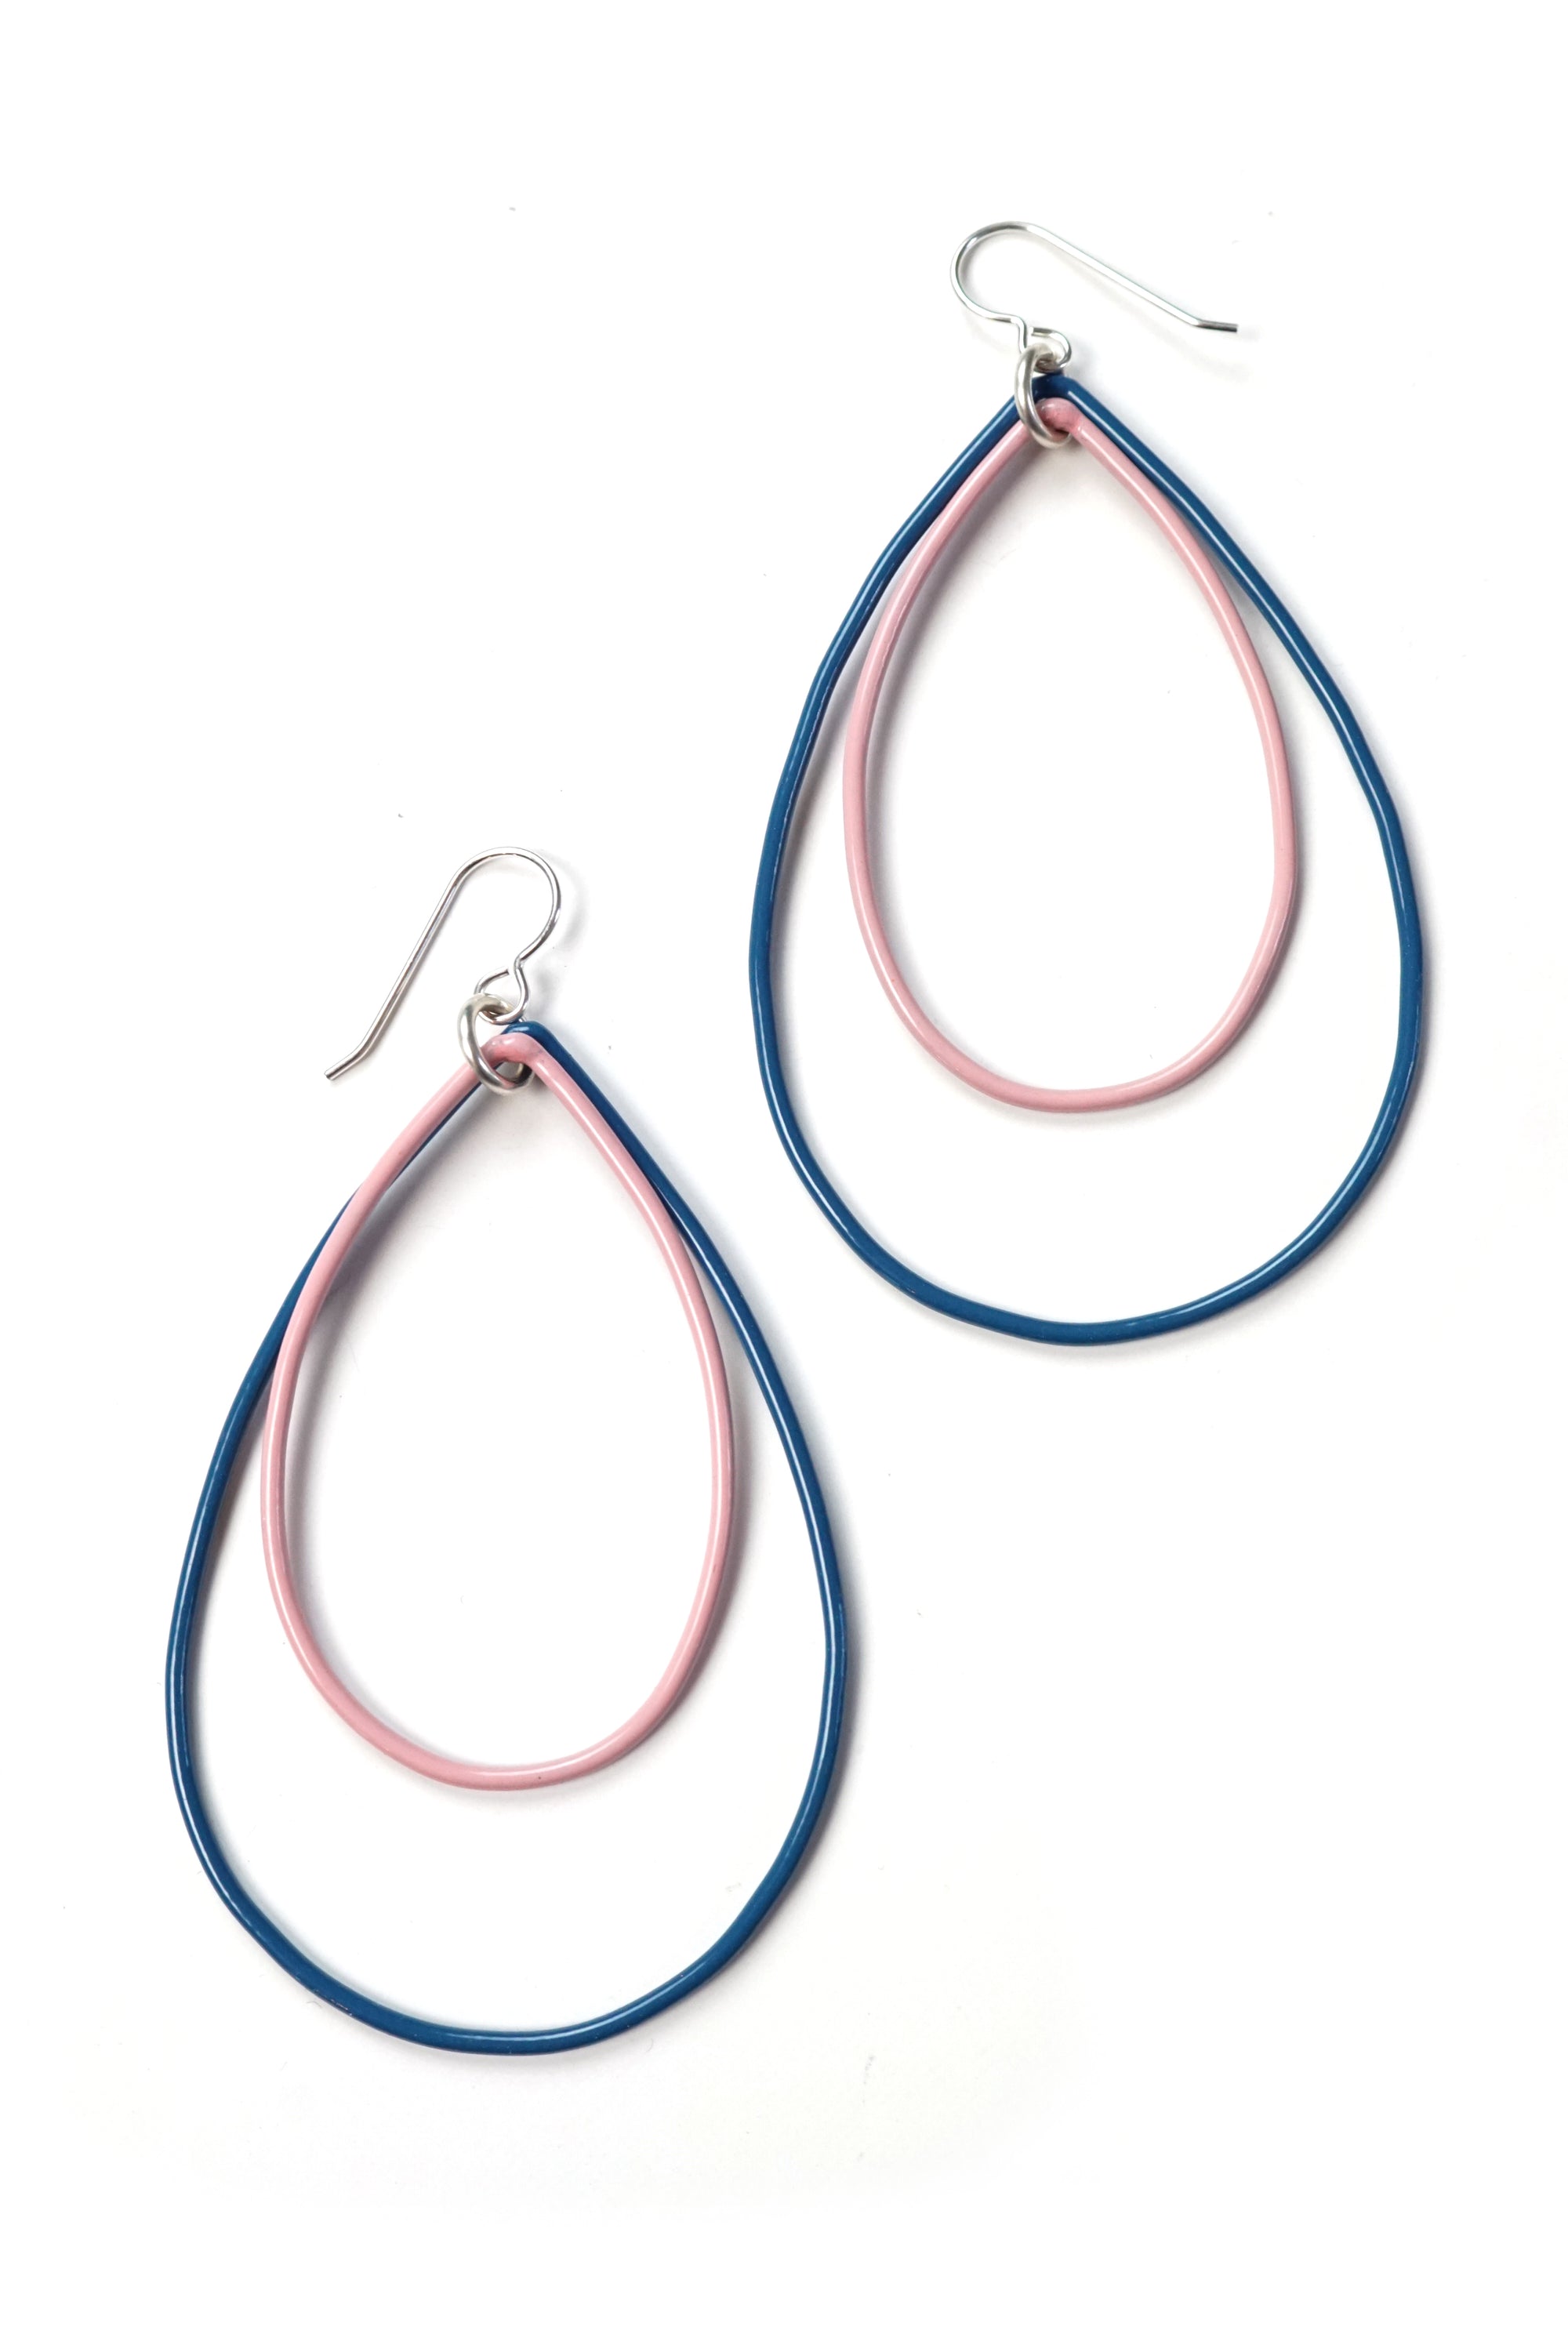 Large Rachel earrings in Azure Blue and Bubble Gum